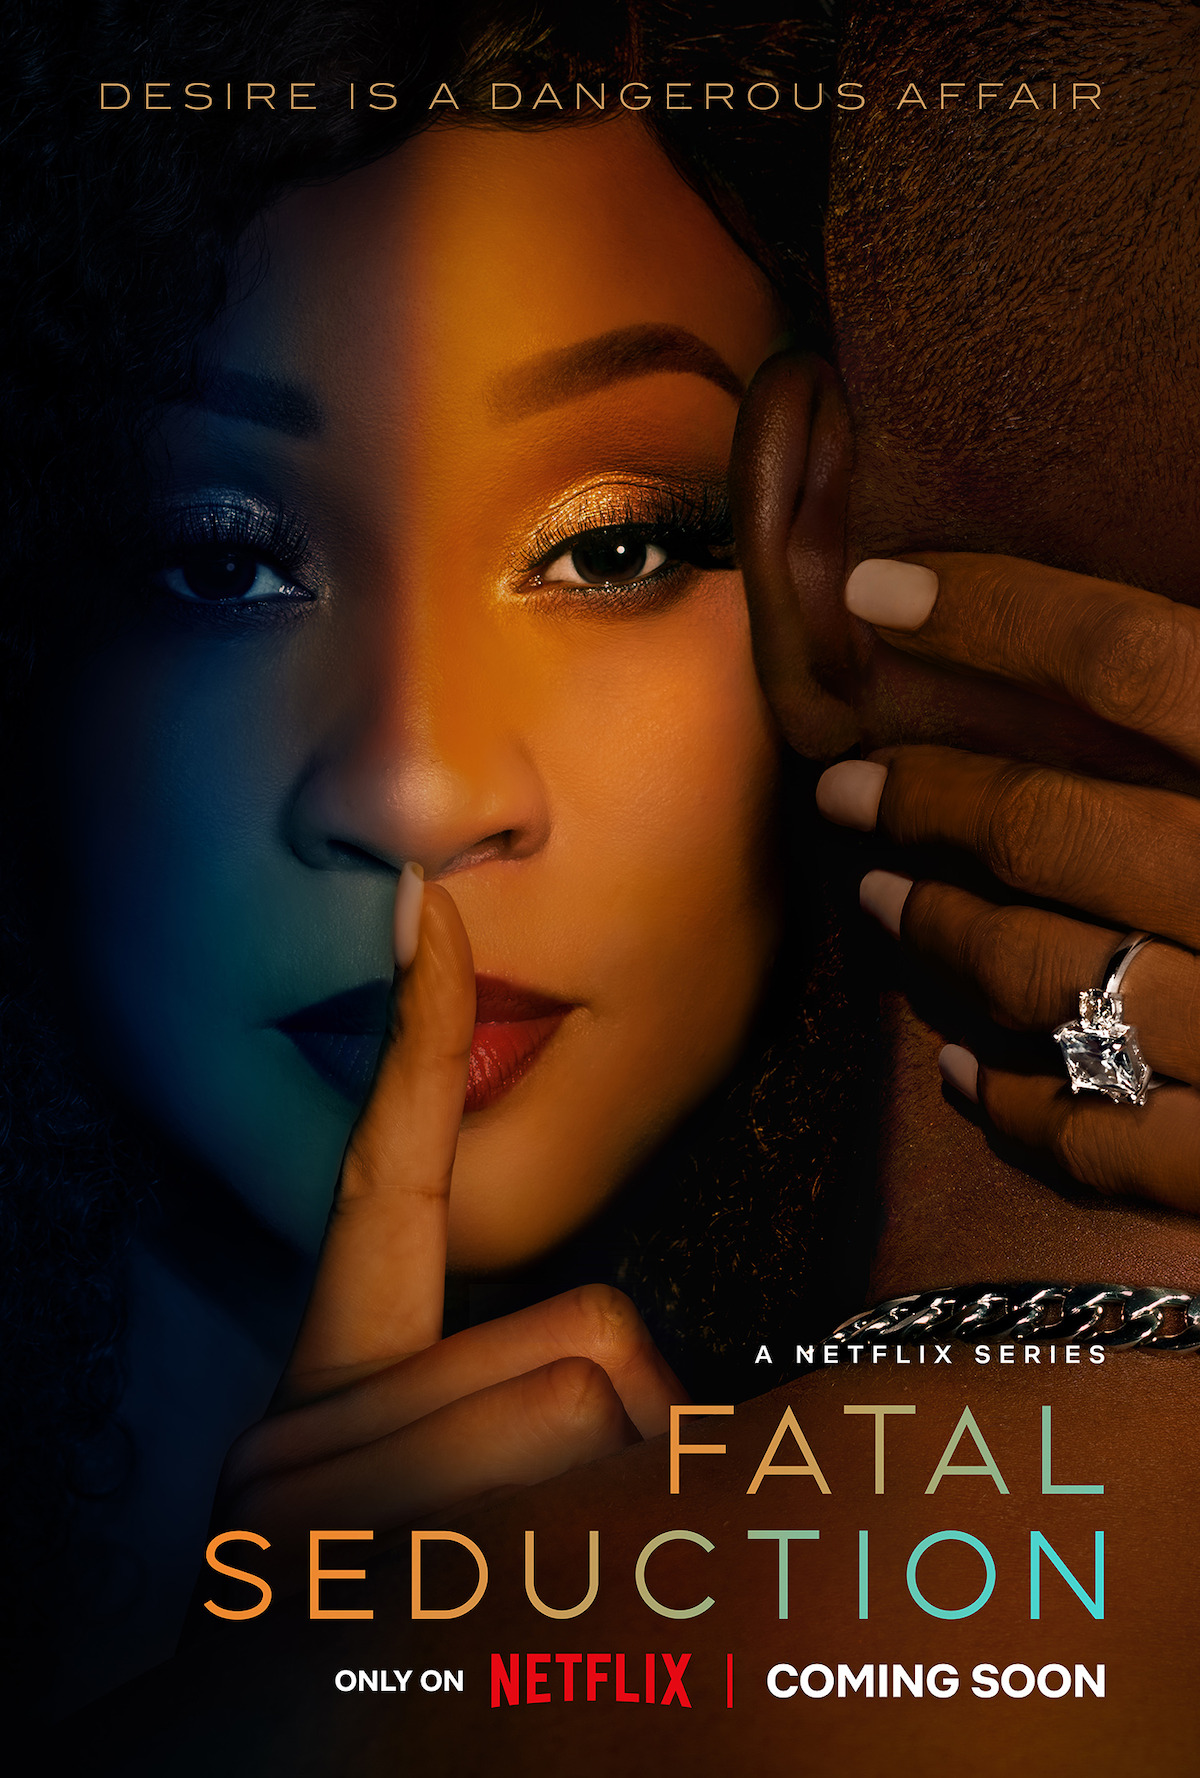 Fatal Seduction Cast, Plot, Release Date and Trailer photo